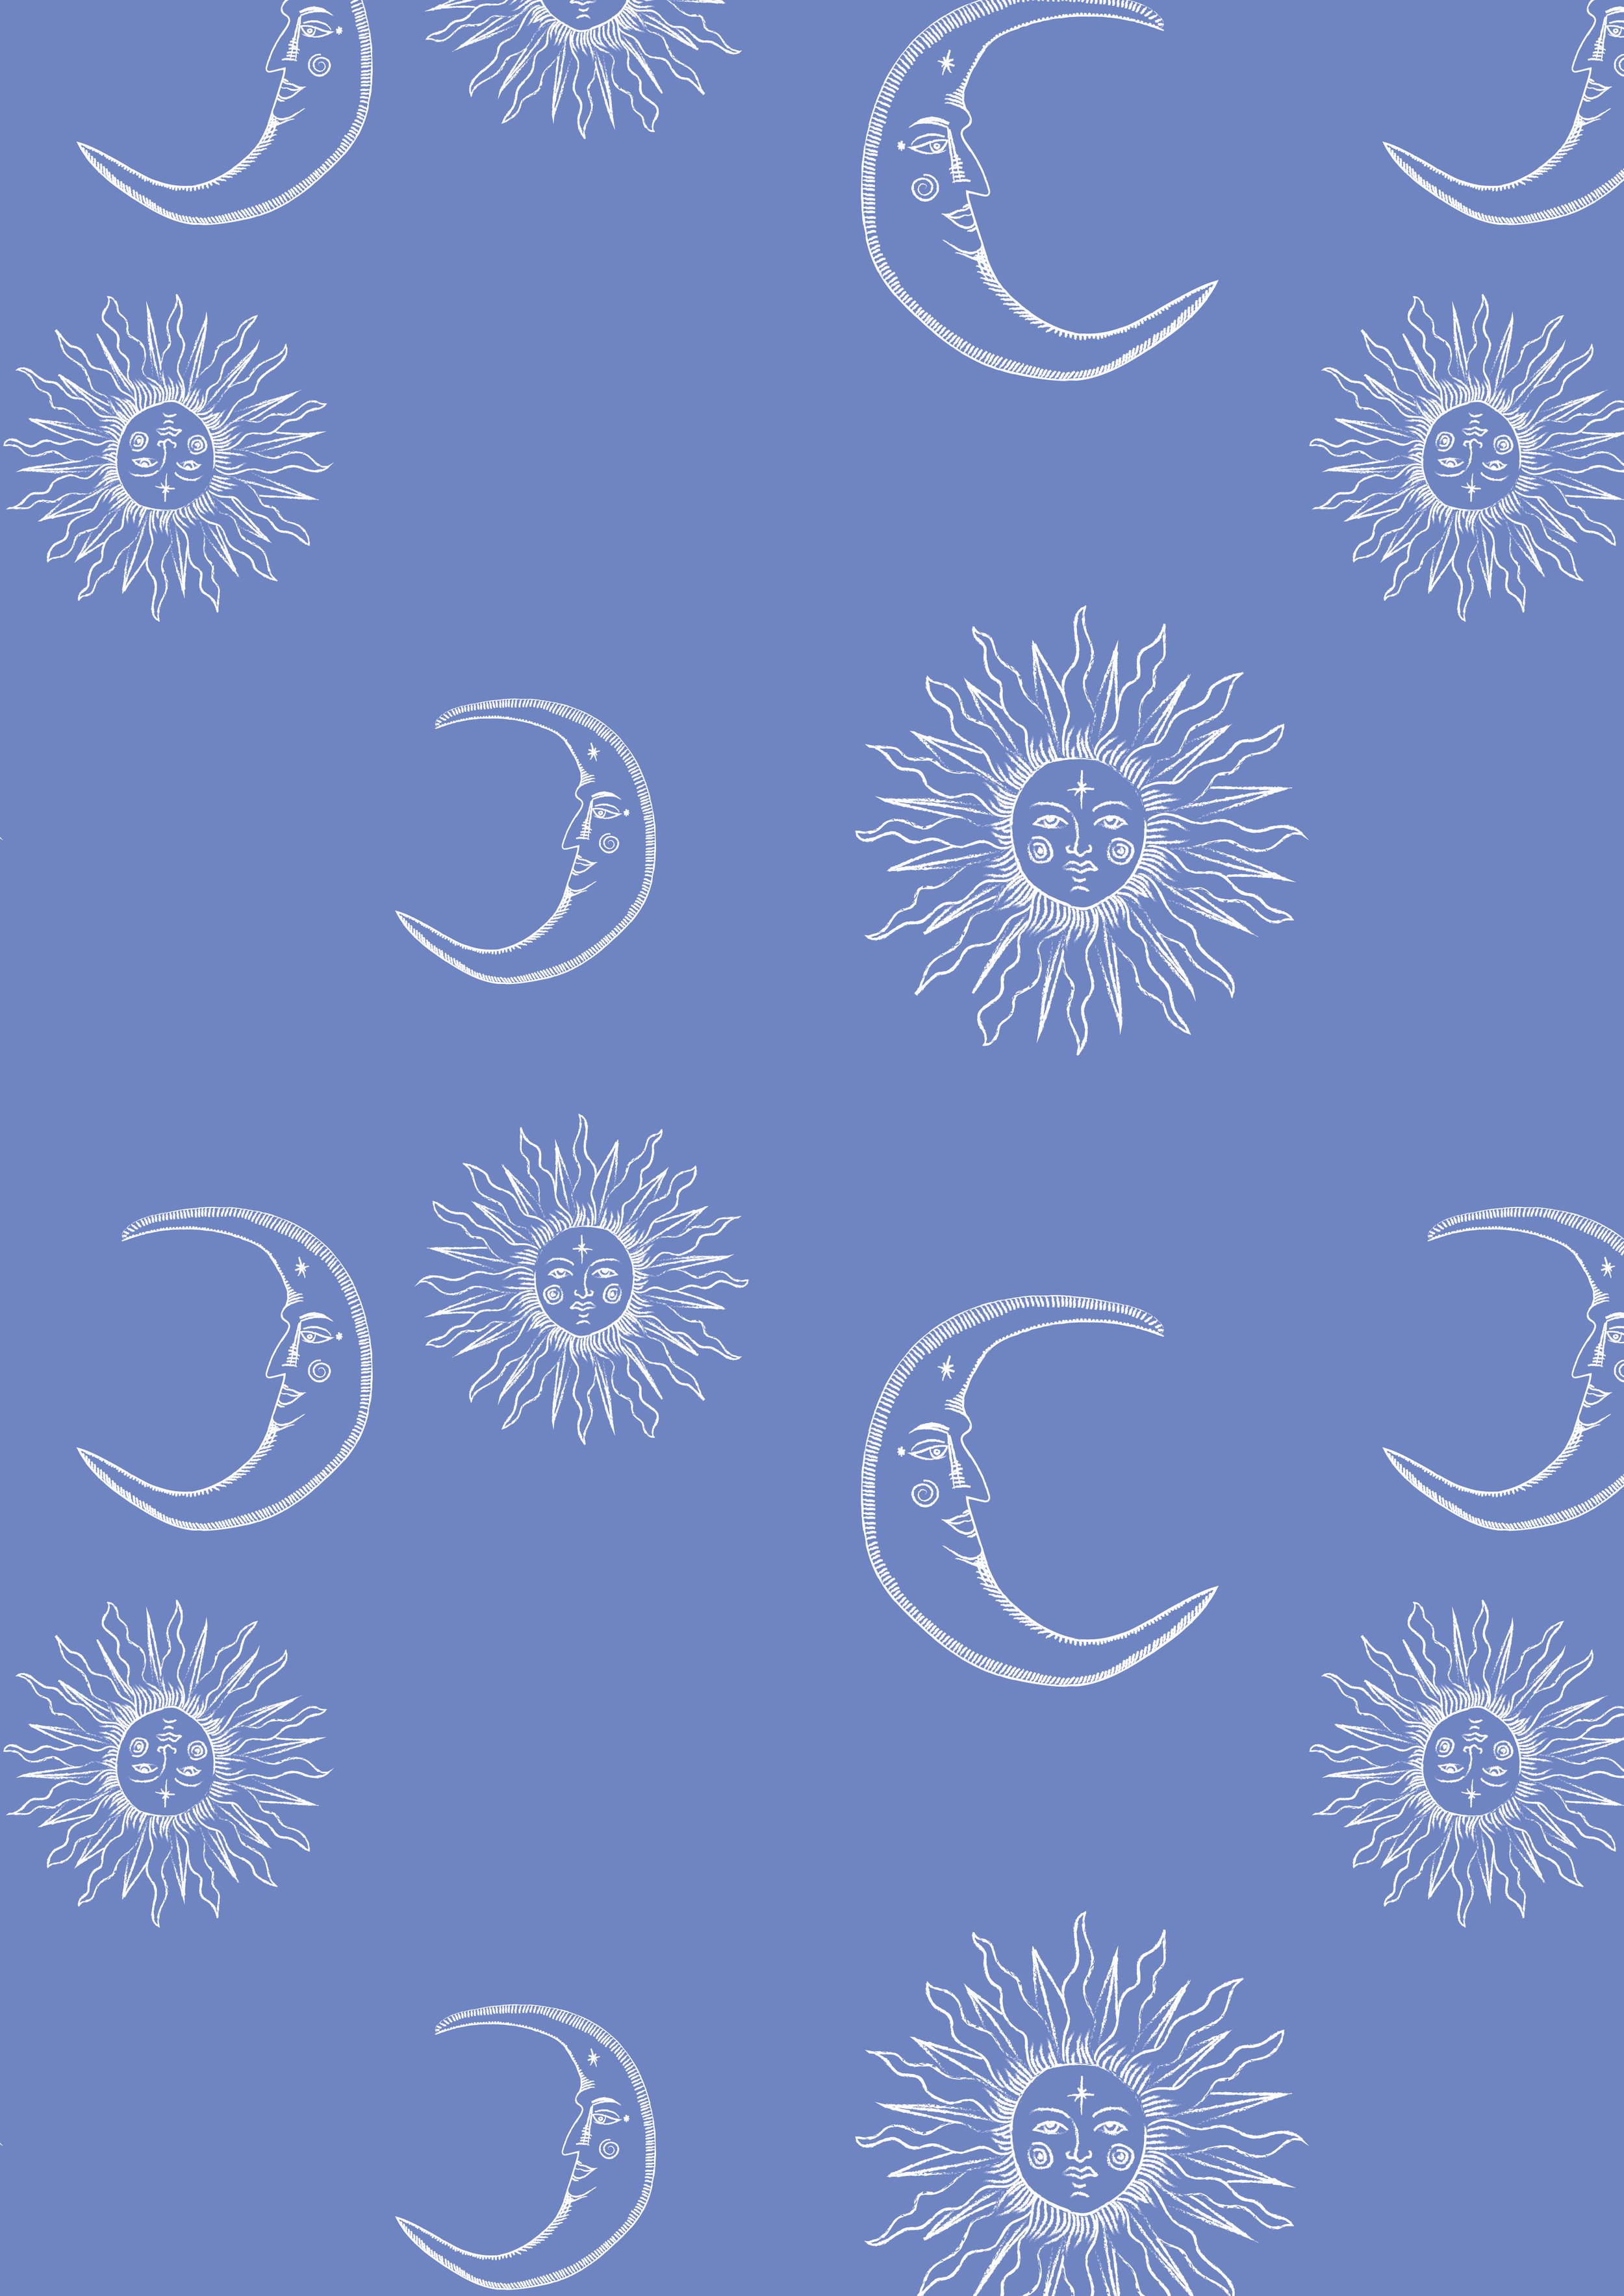 Sun and moon print.jpg